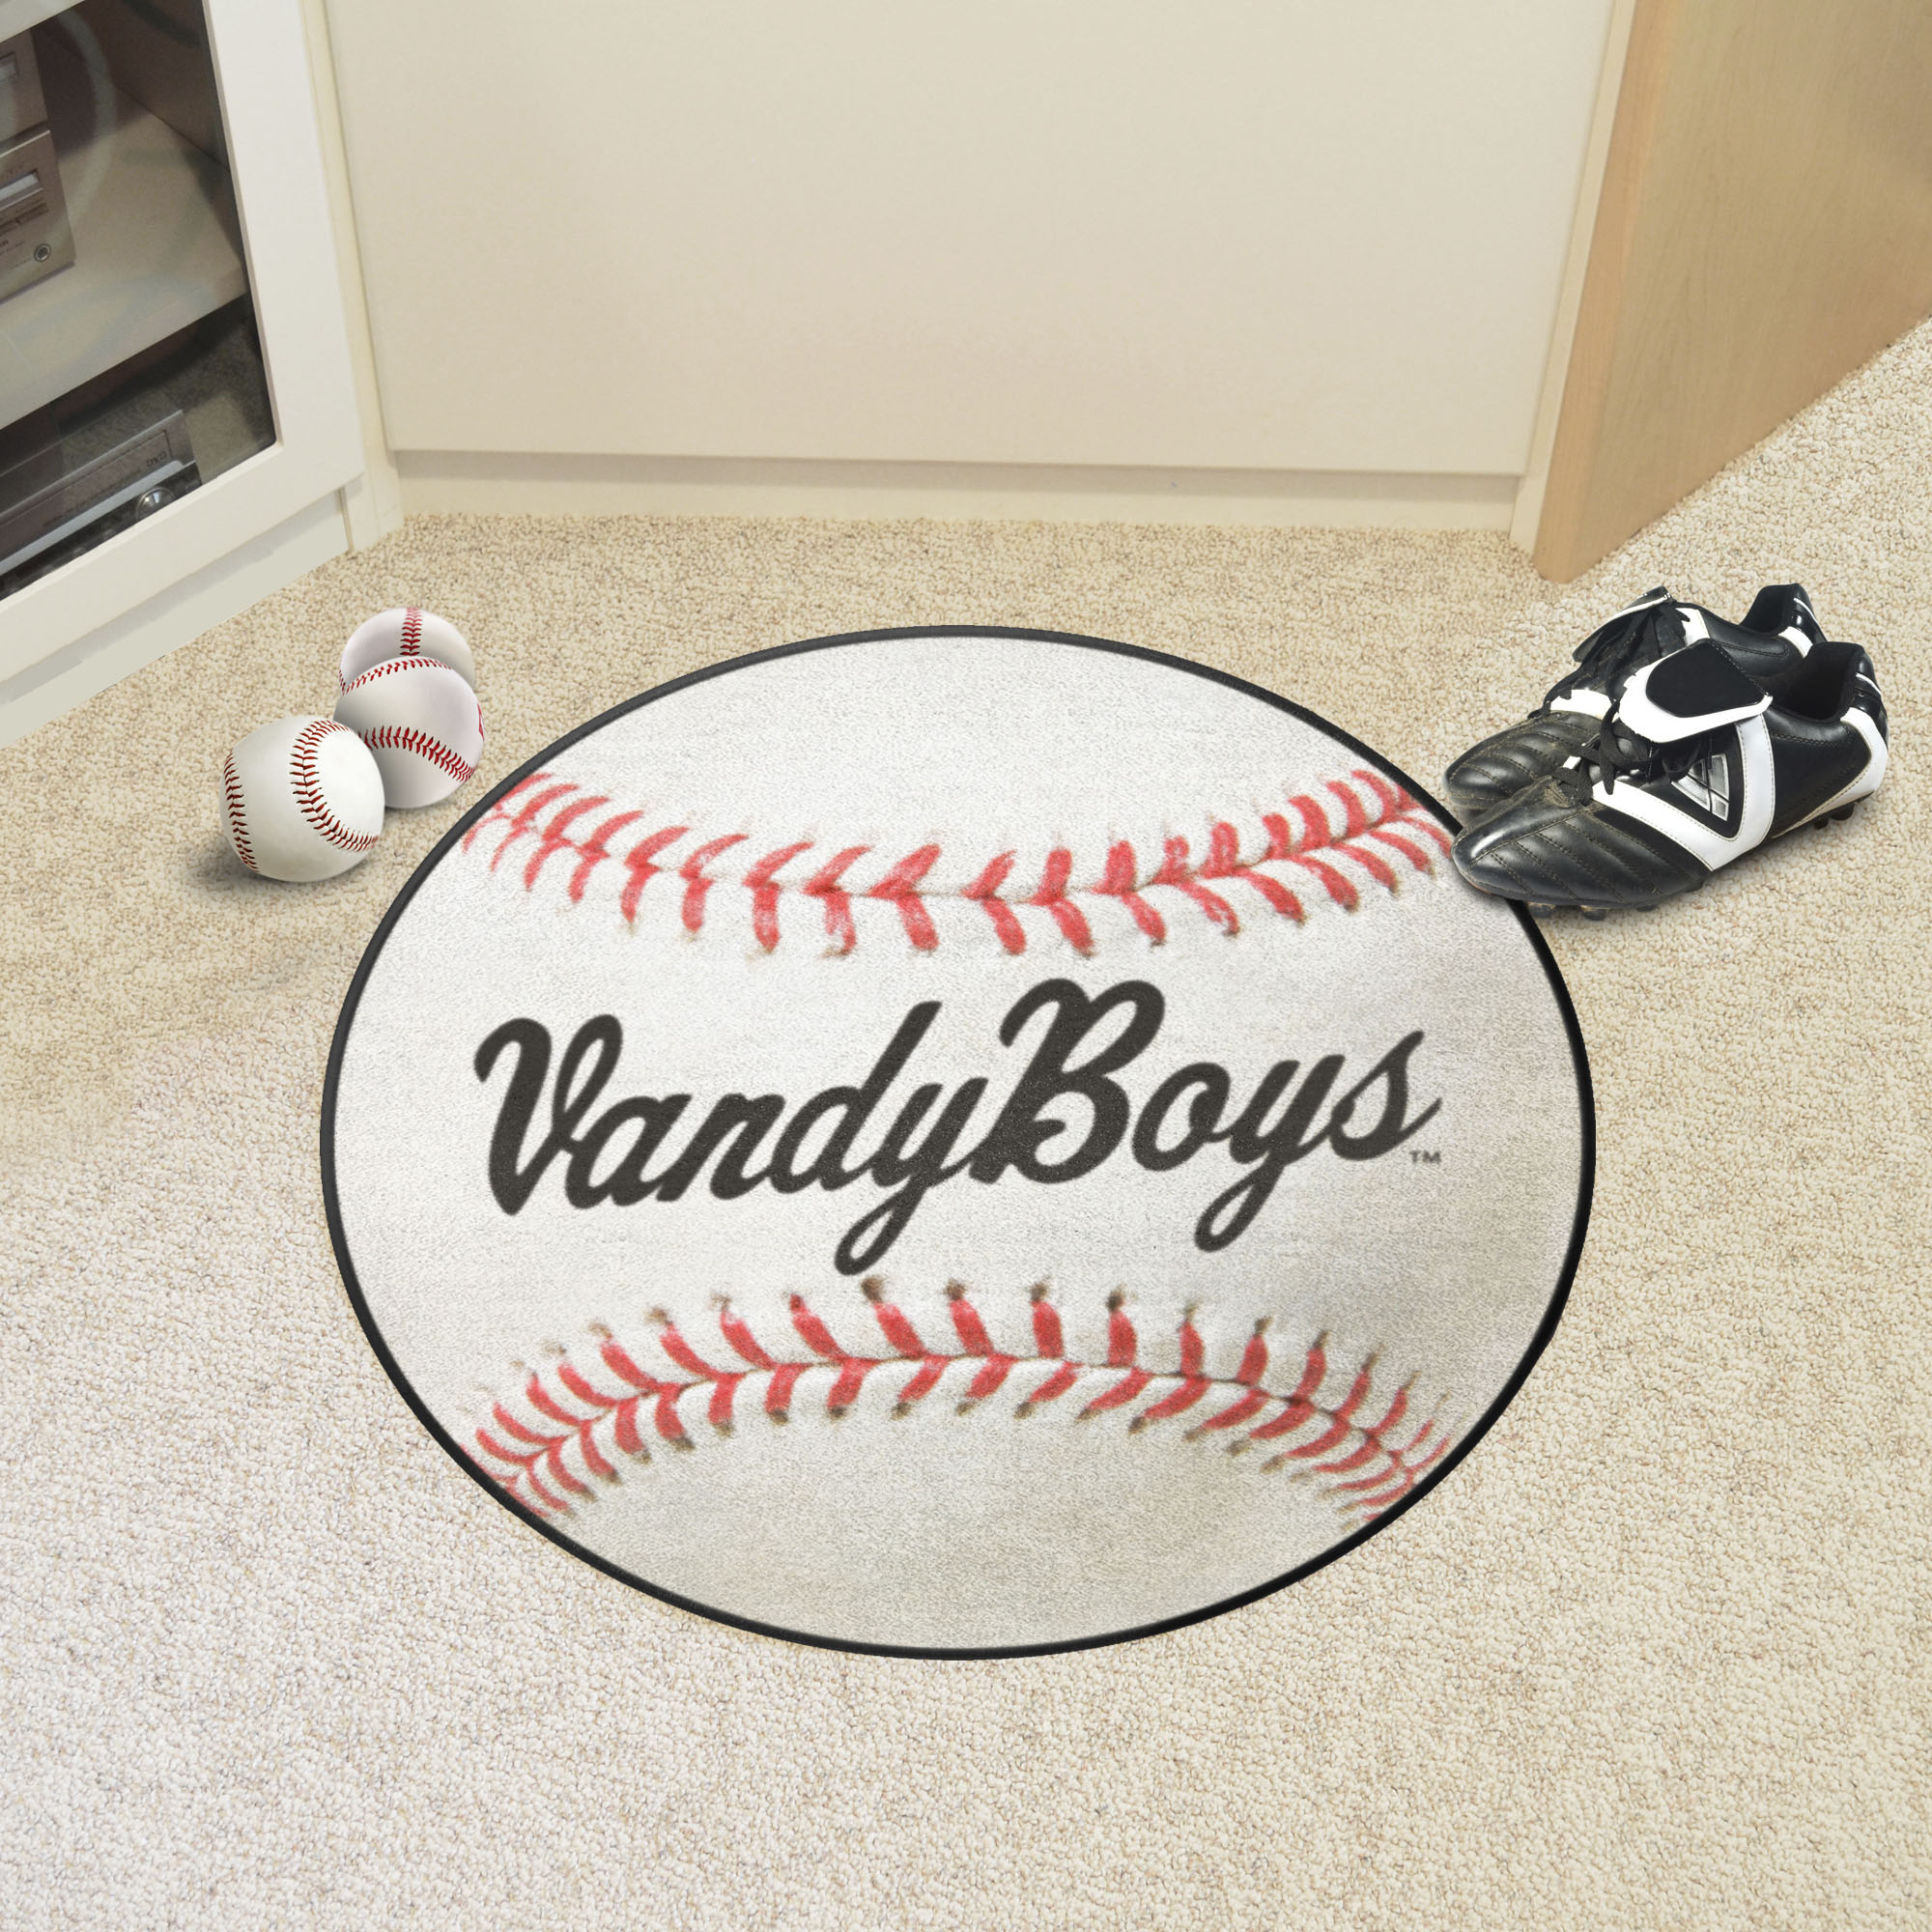 Vandy Boys Baseball Shaped Area Rug